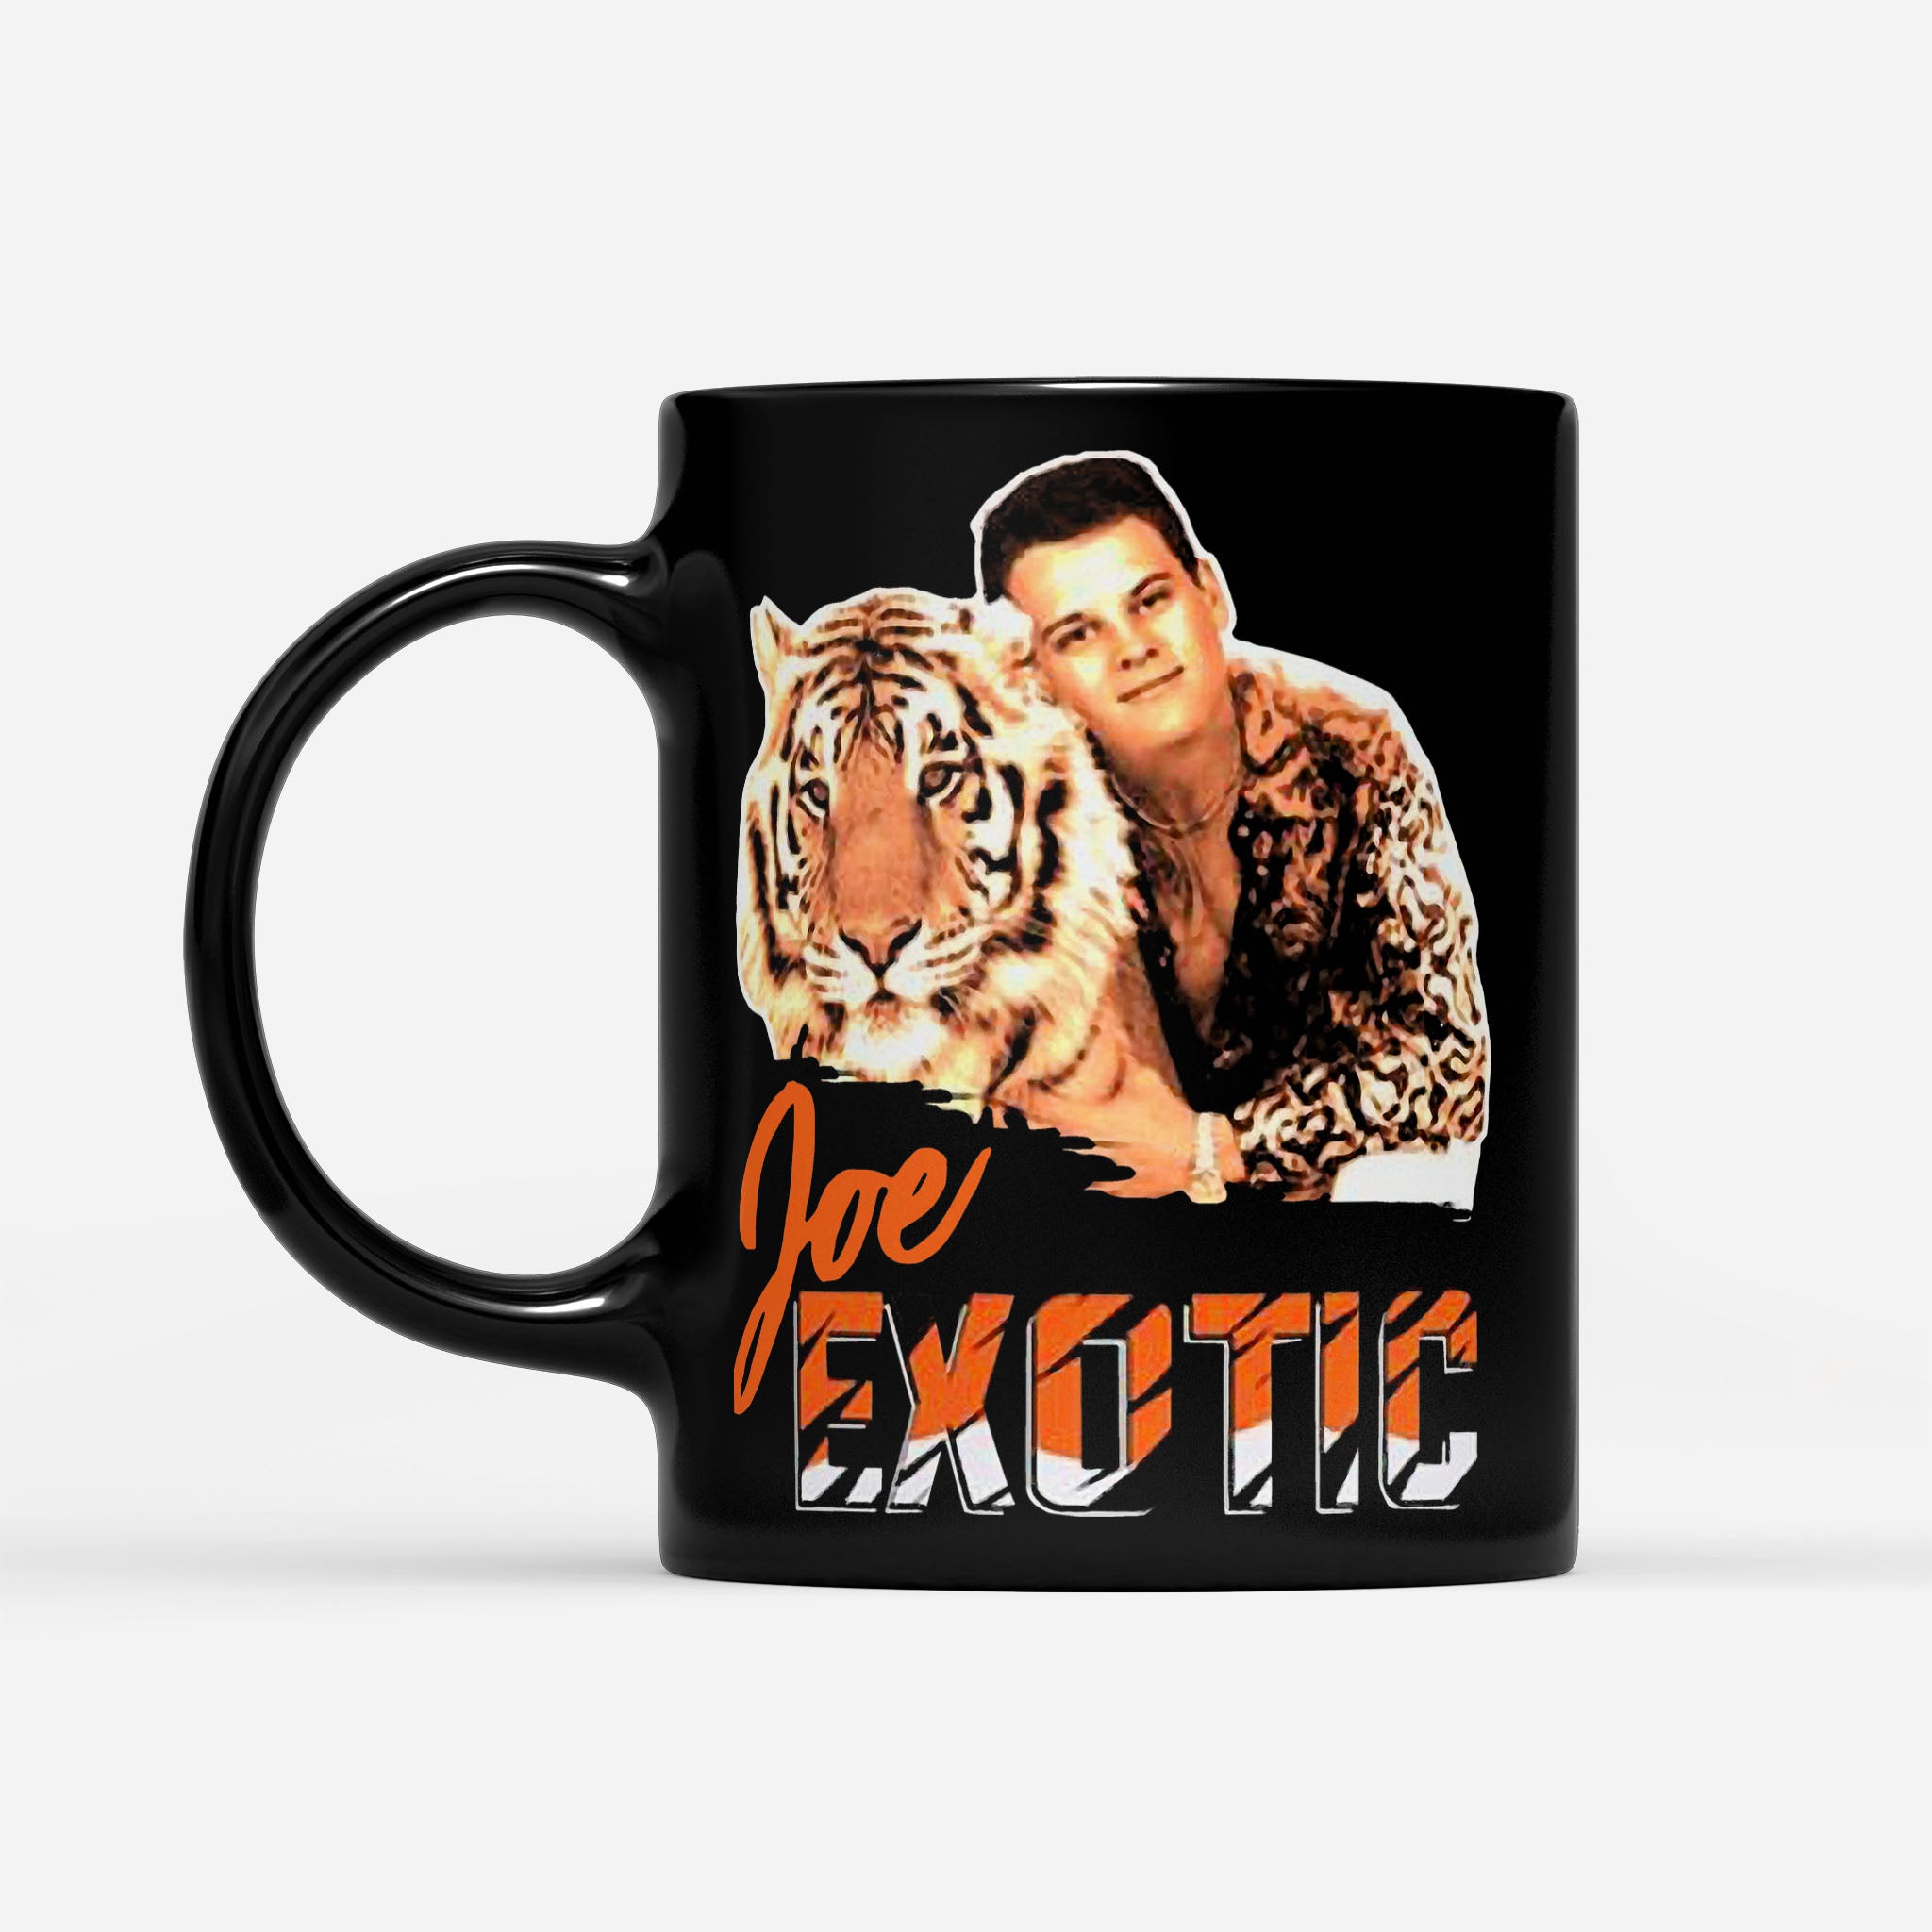 Joe Exotic Merchandise - Black Mug